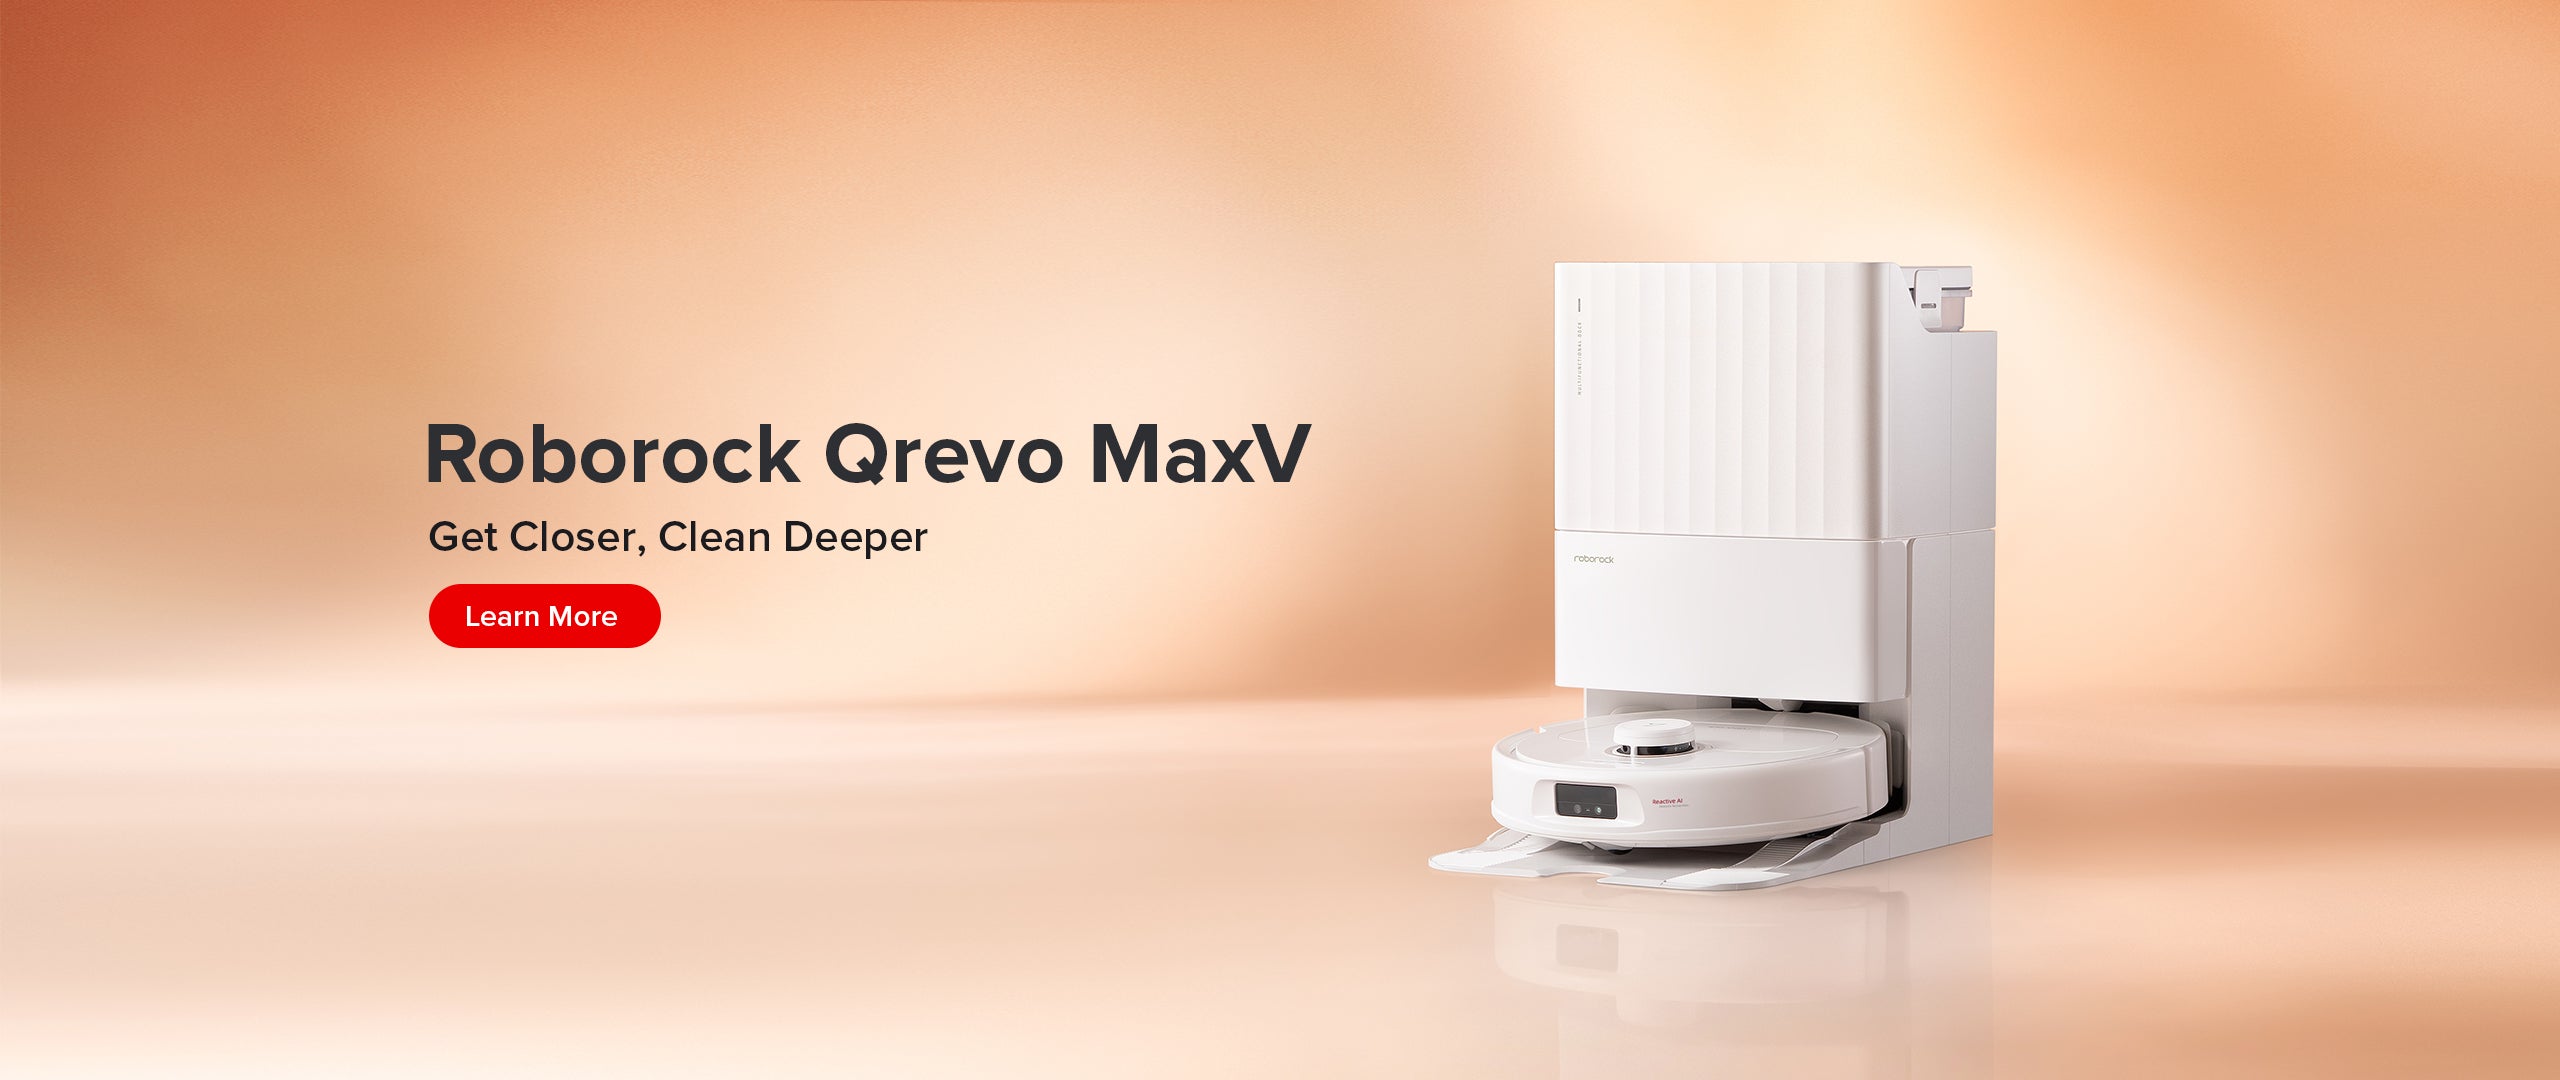 Roborock S7 MaxV Ultra review